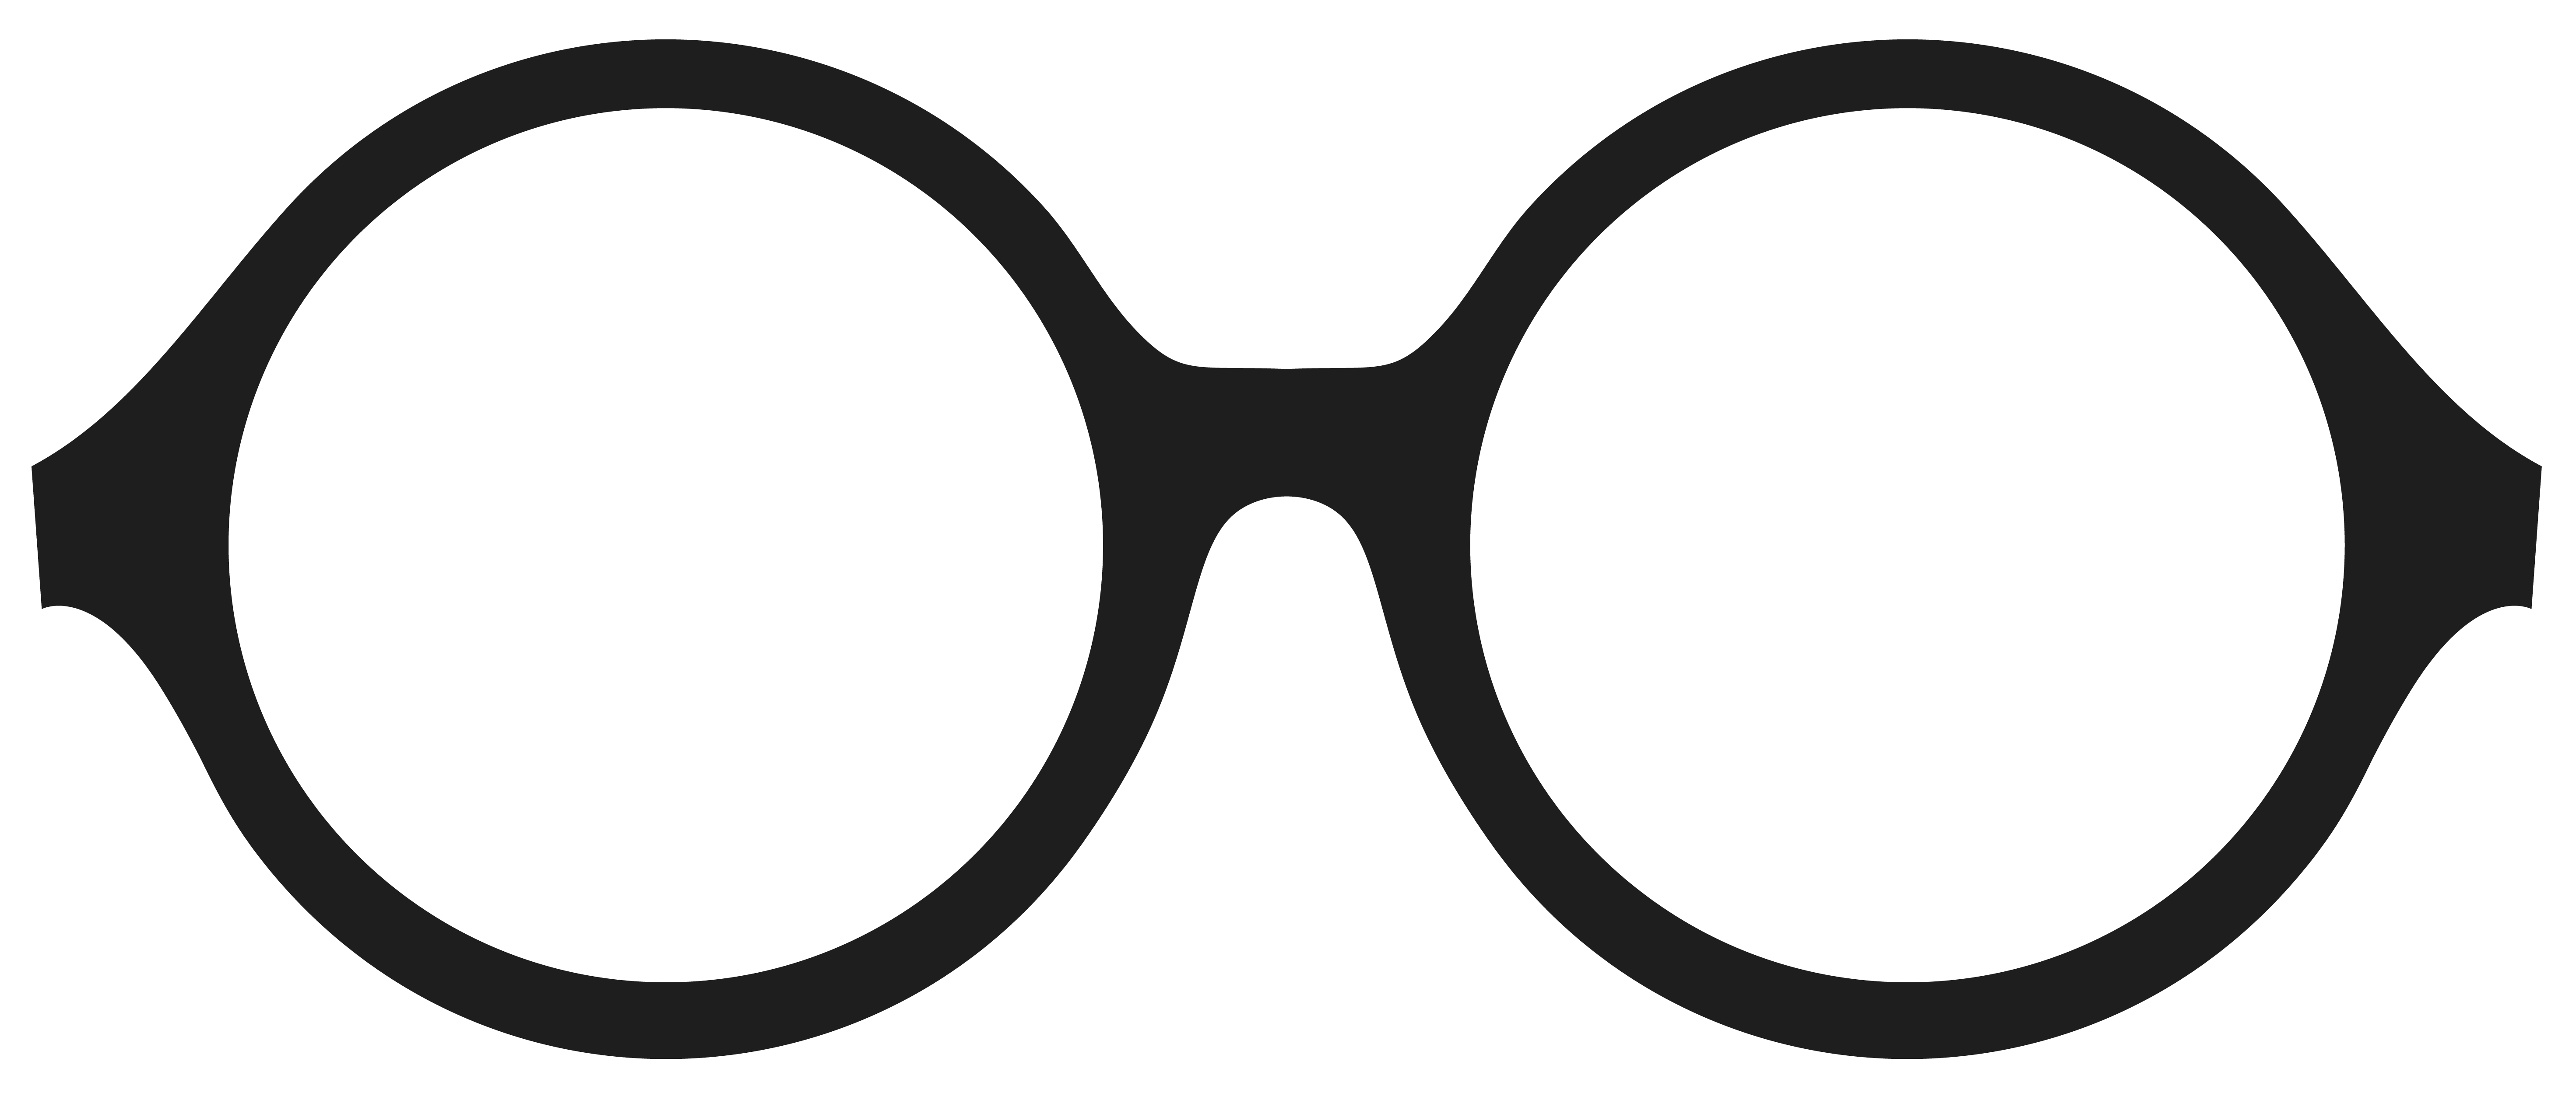 Glasses Png Images Cartoon Glasses Mlg Glasses Png Free Transparent Png Logos